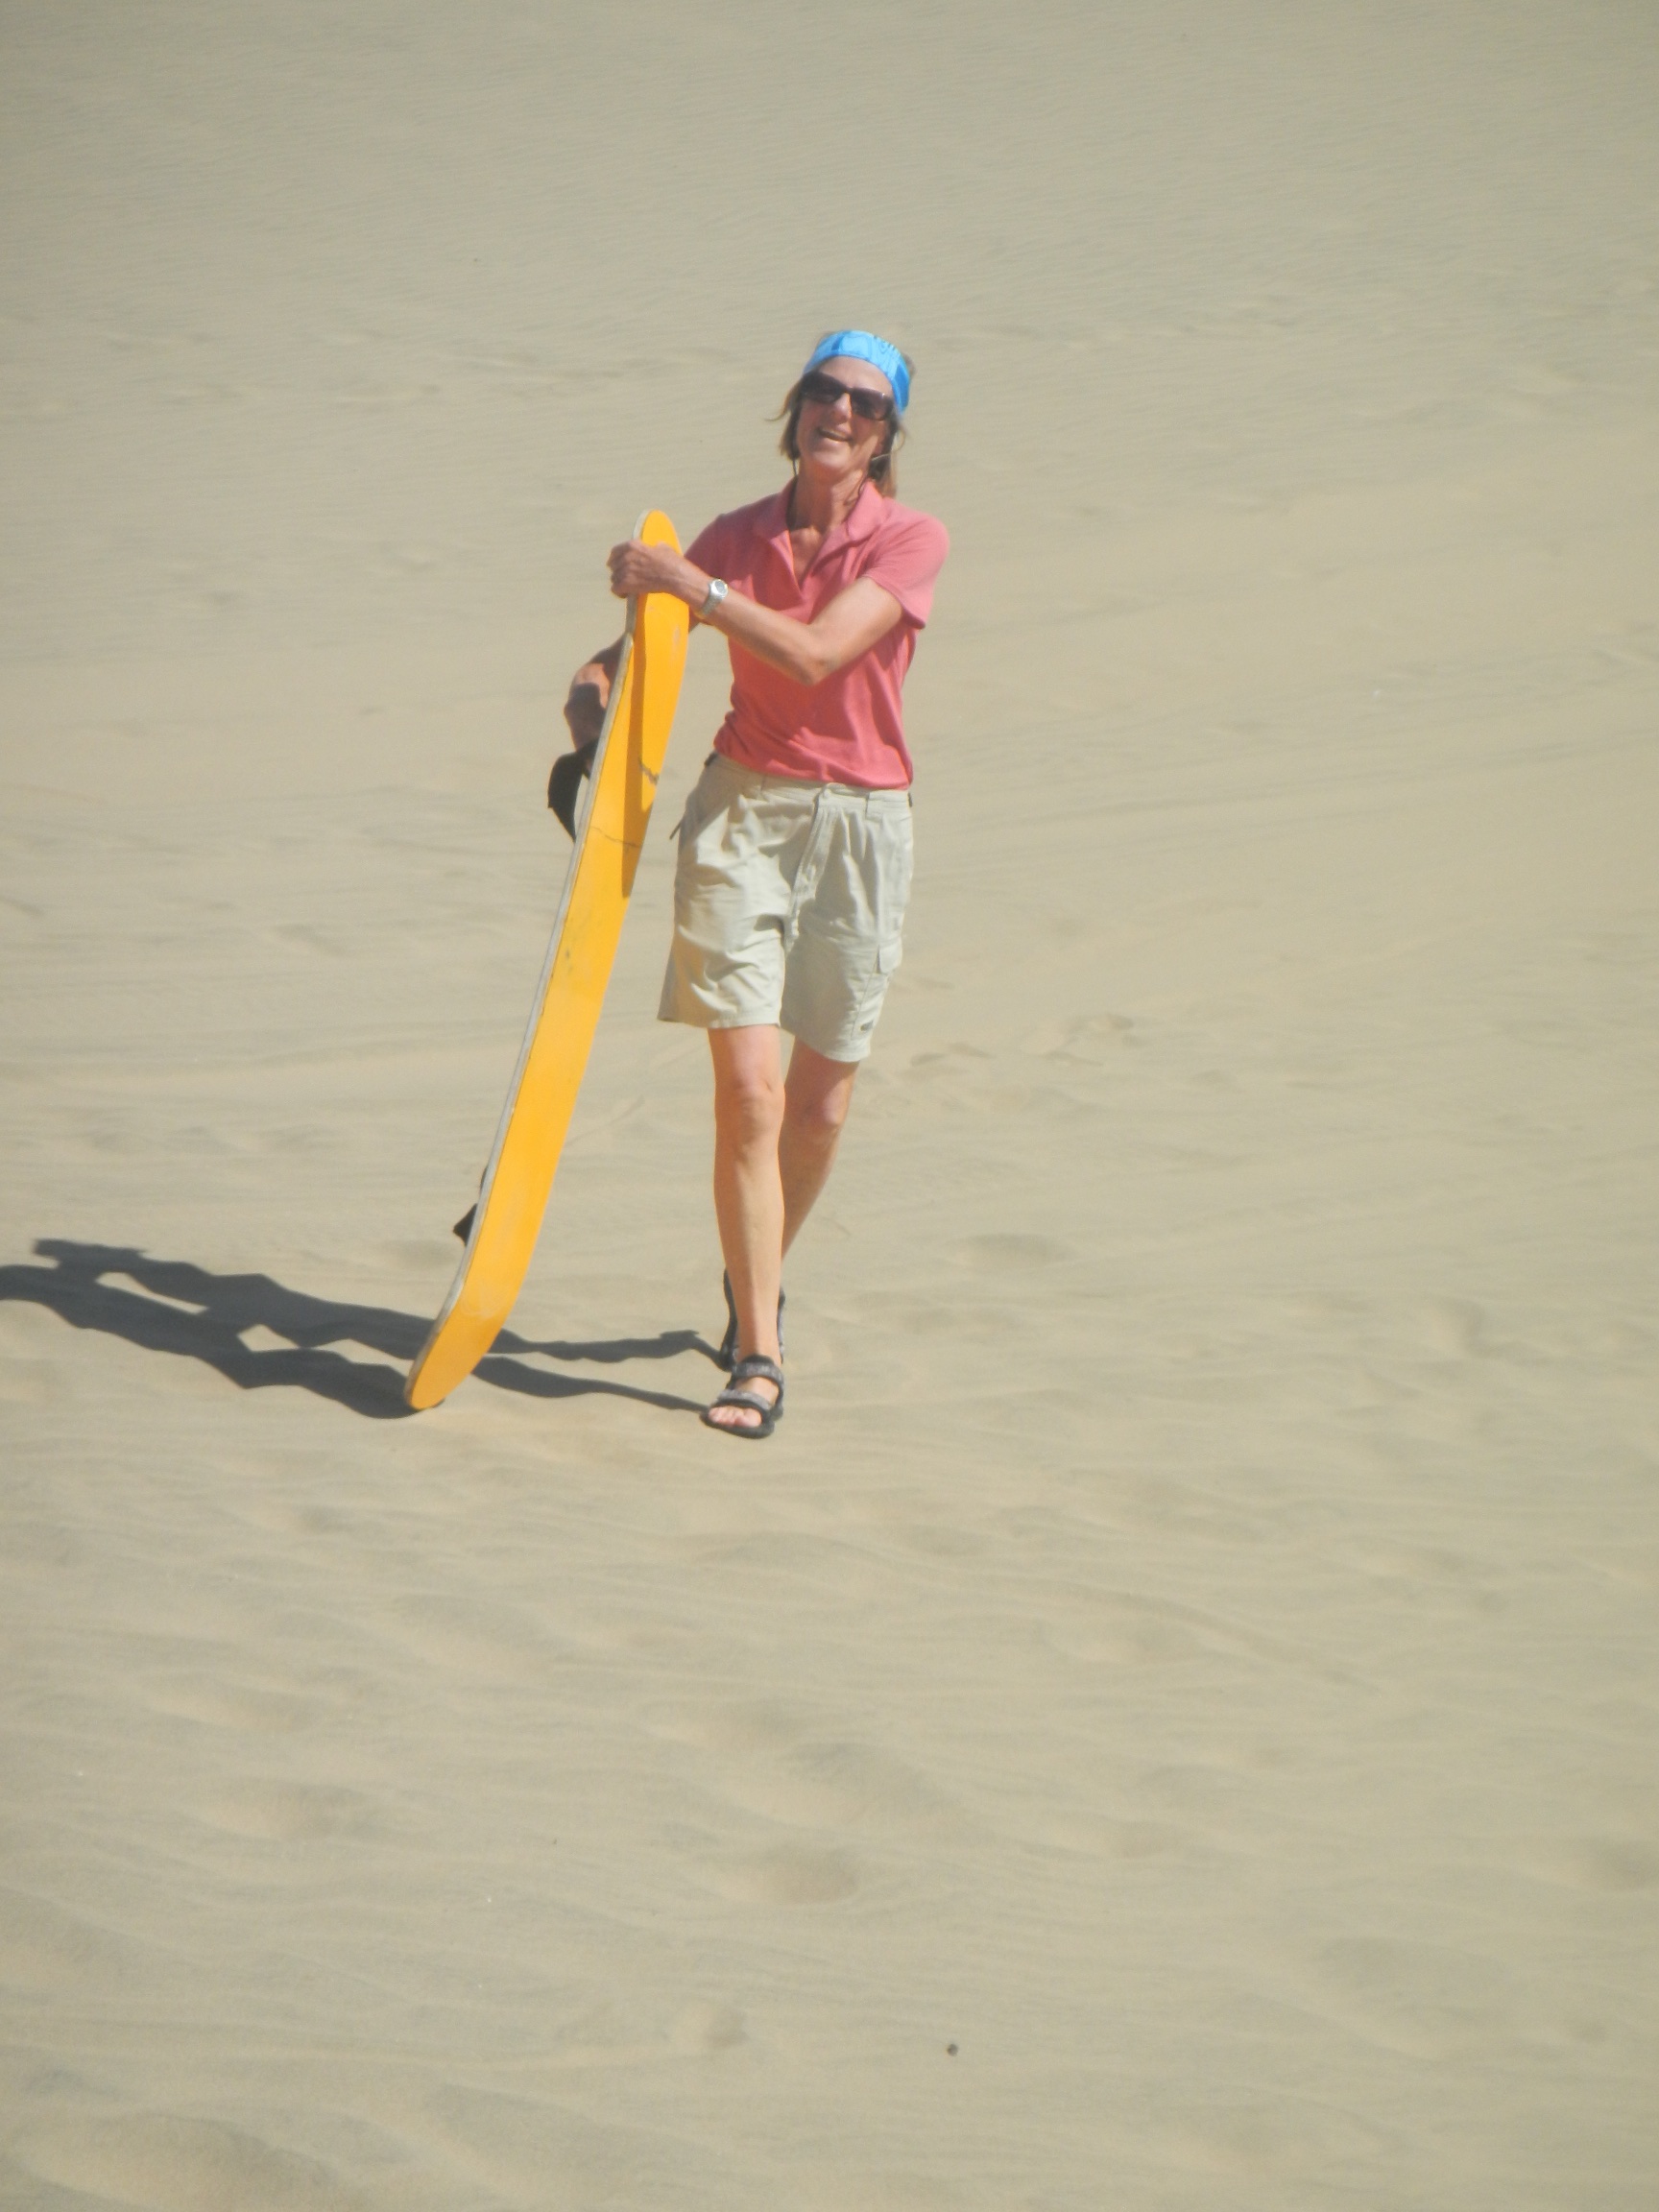  Corinne with sand board, sand dune, Ica, Peru 